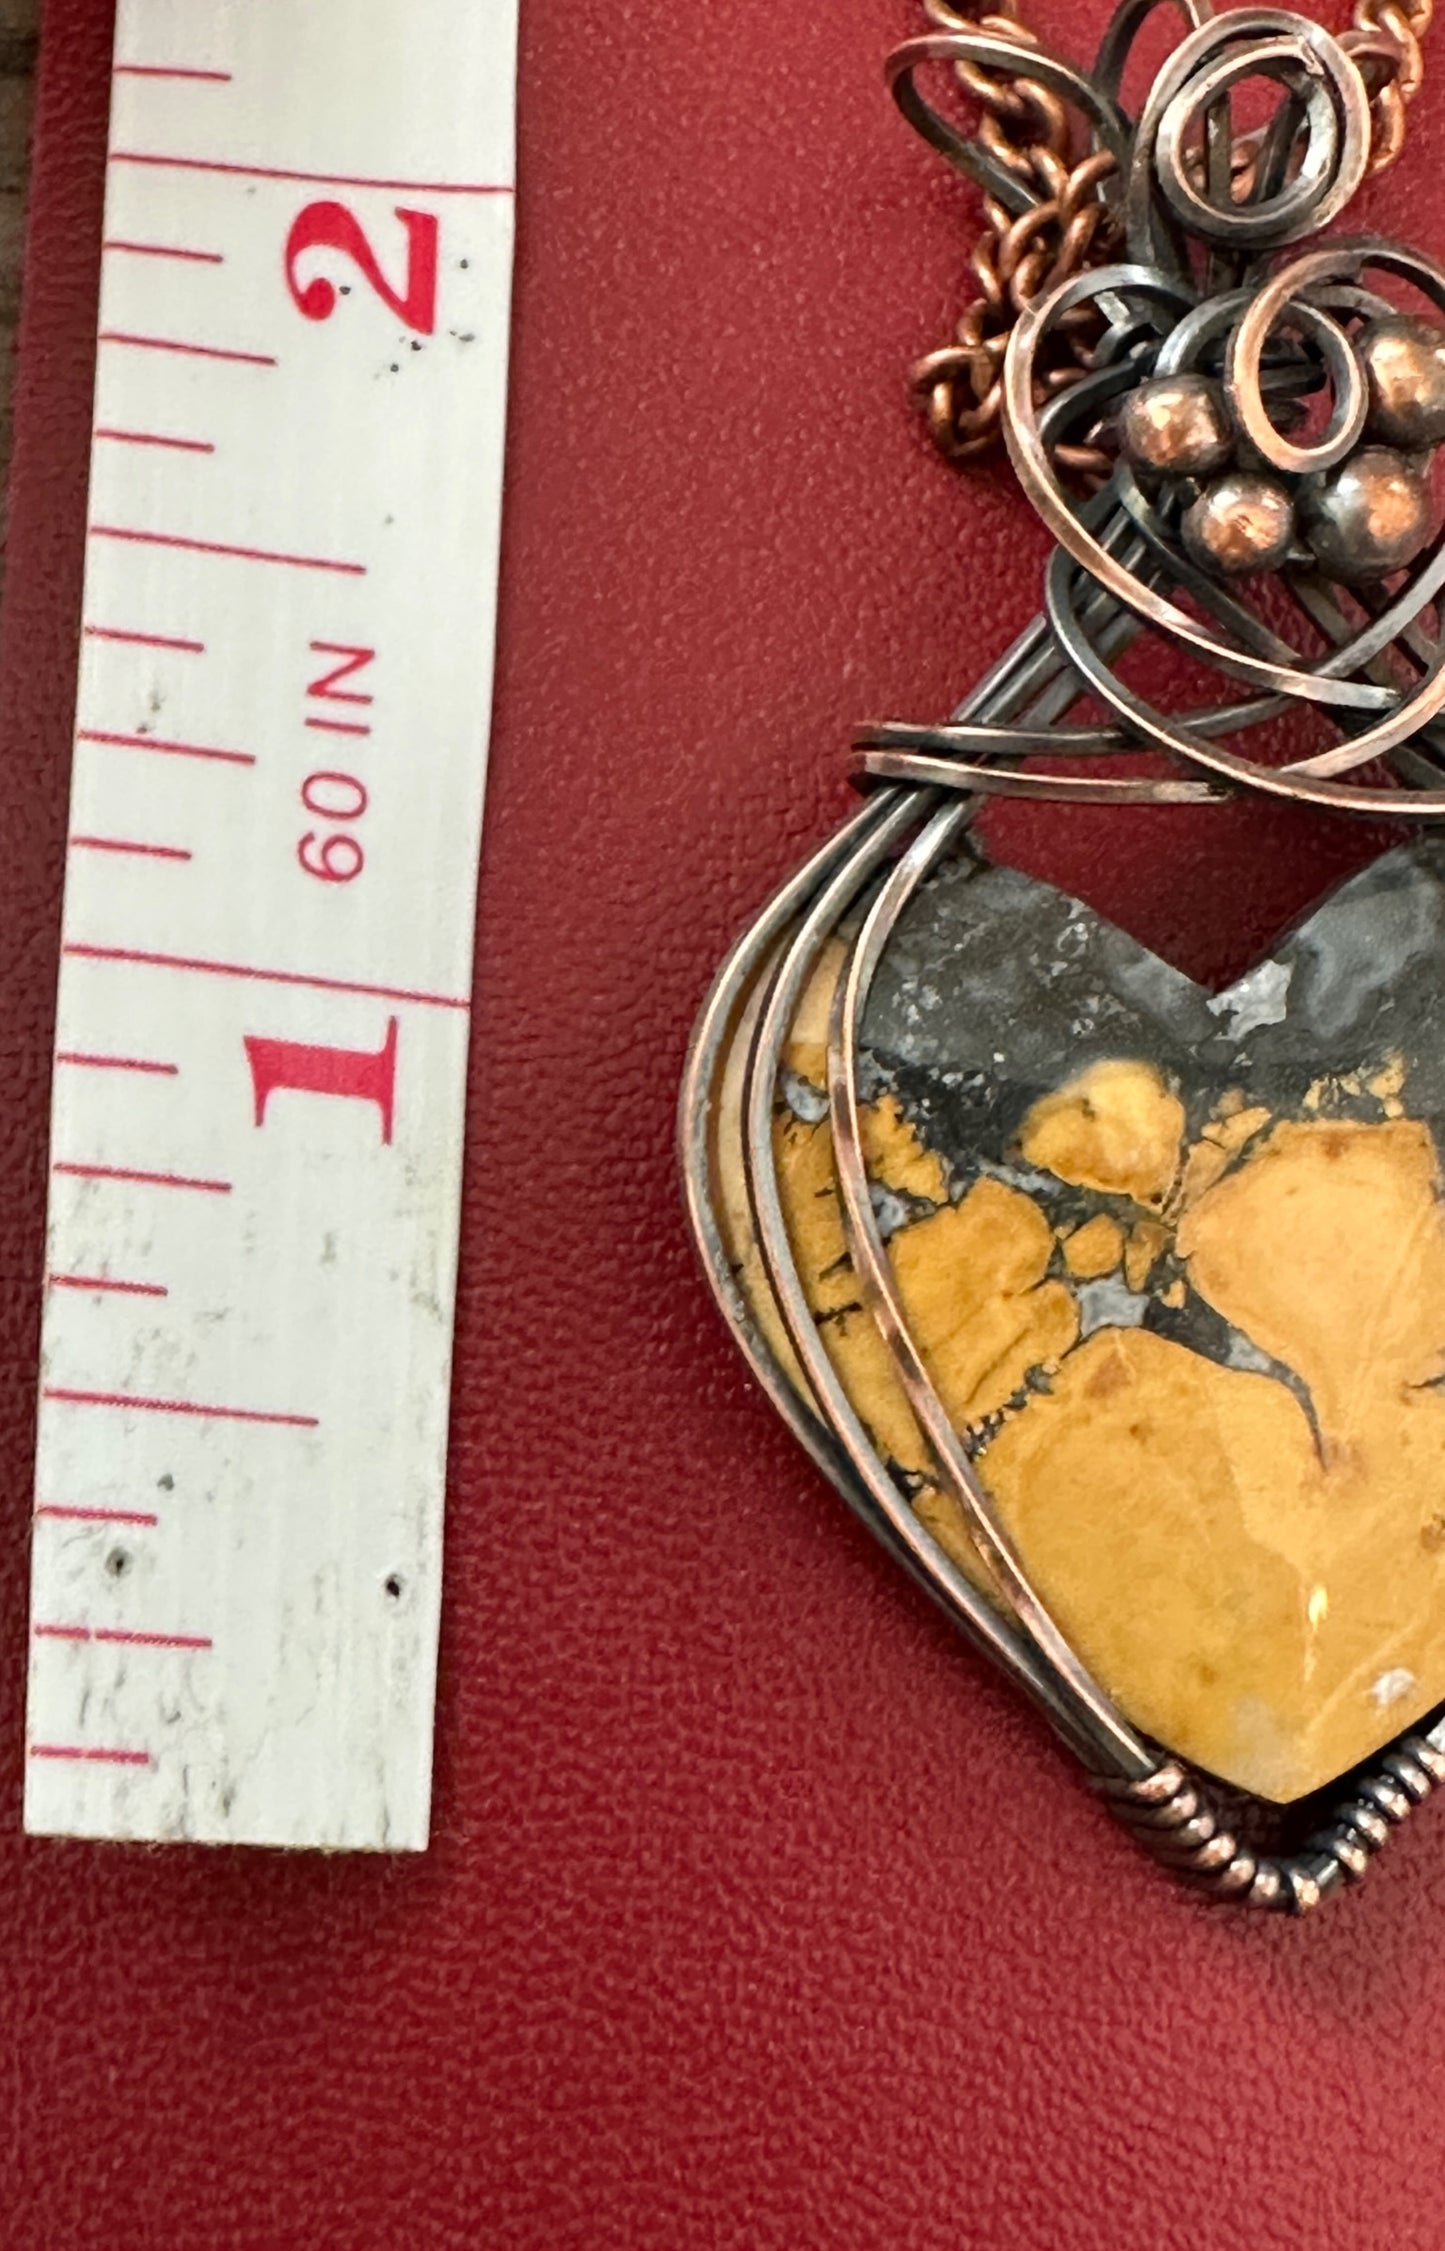 Mookaite Jasper Heart Shaped Pendant